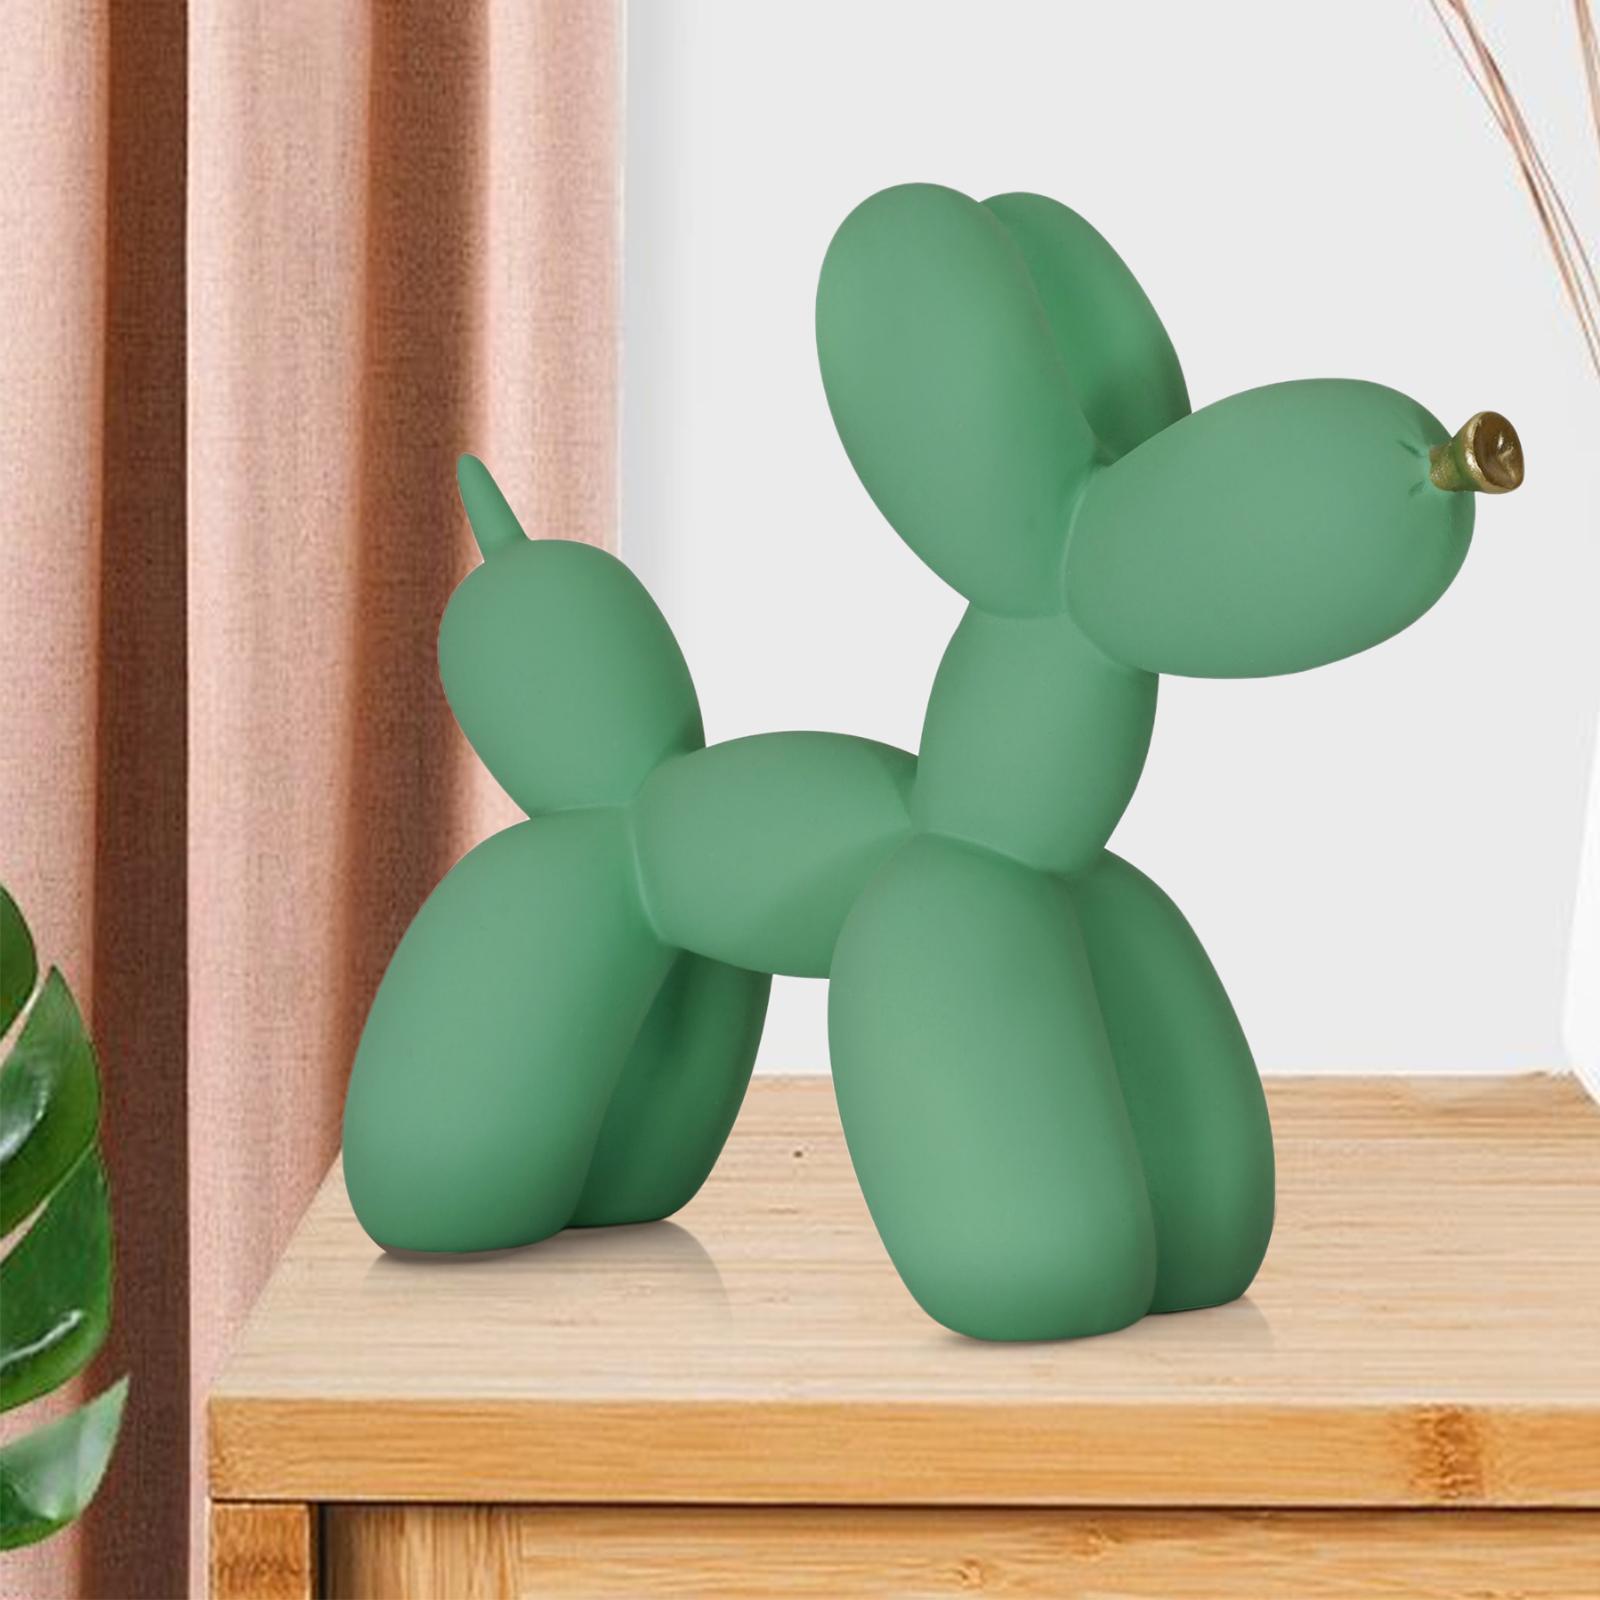 Balloon Dog Statue Home Decor Ornament Lover Gift Collectible green